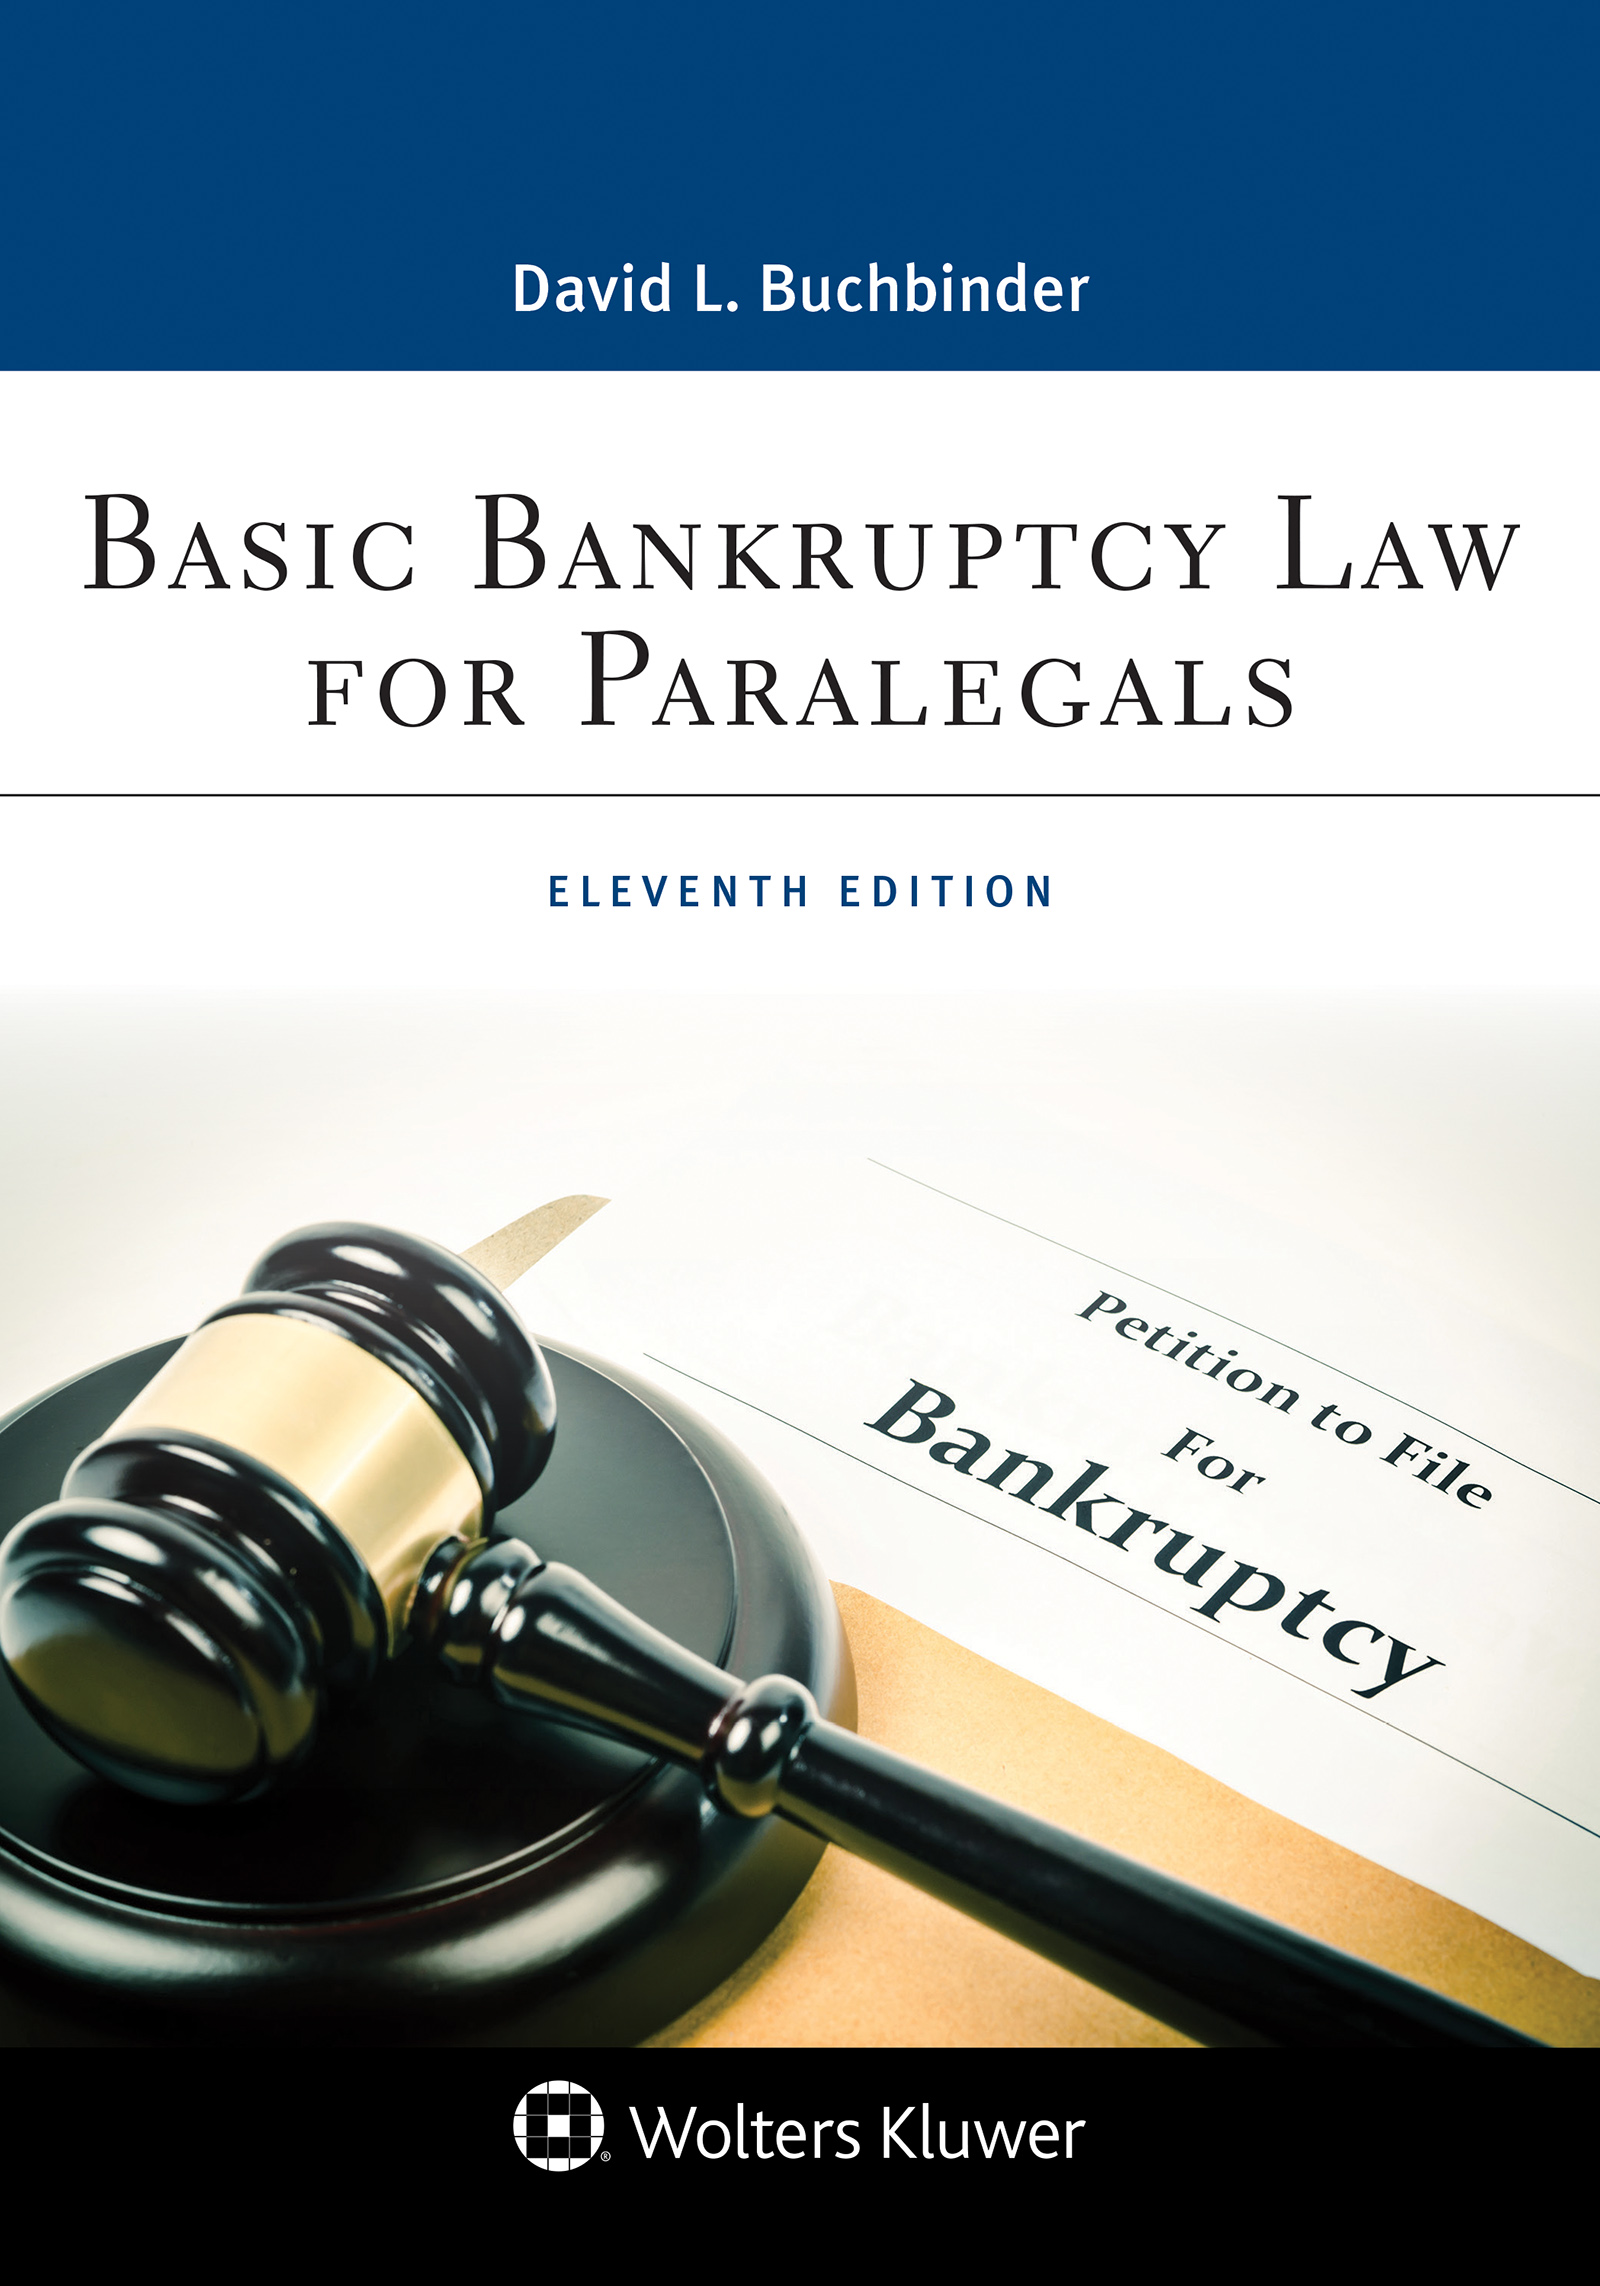 Practical Bankruptcy Law | Blackstone Career Institute